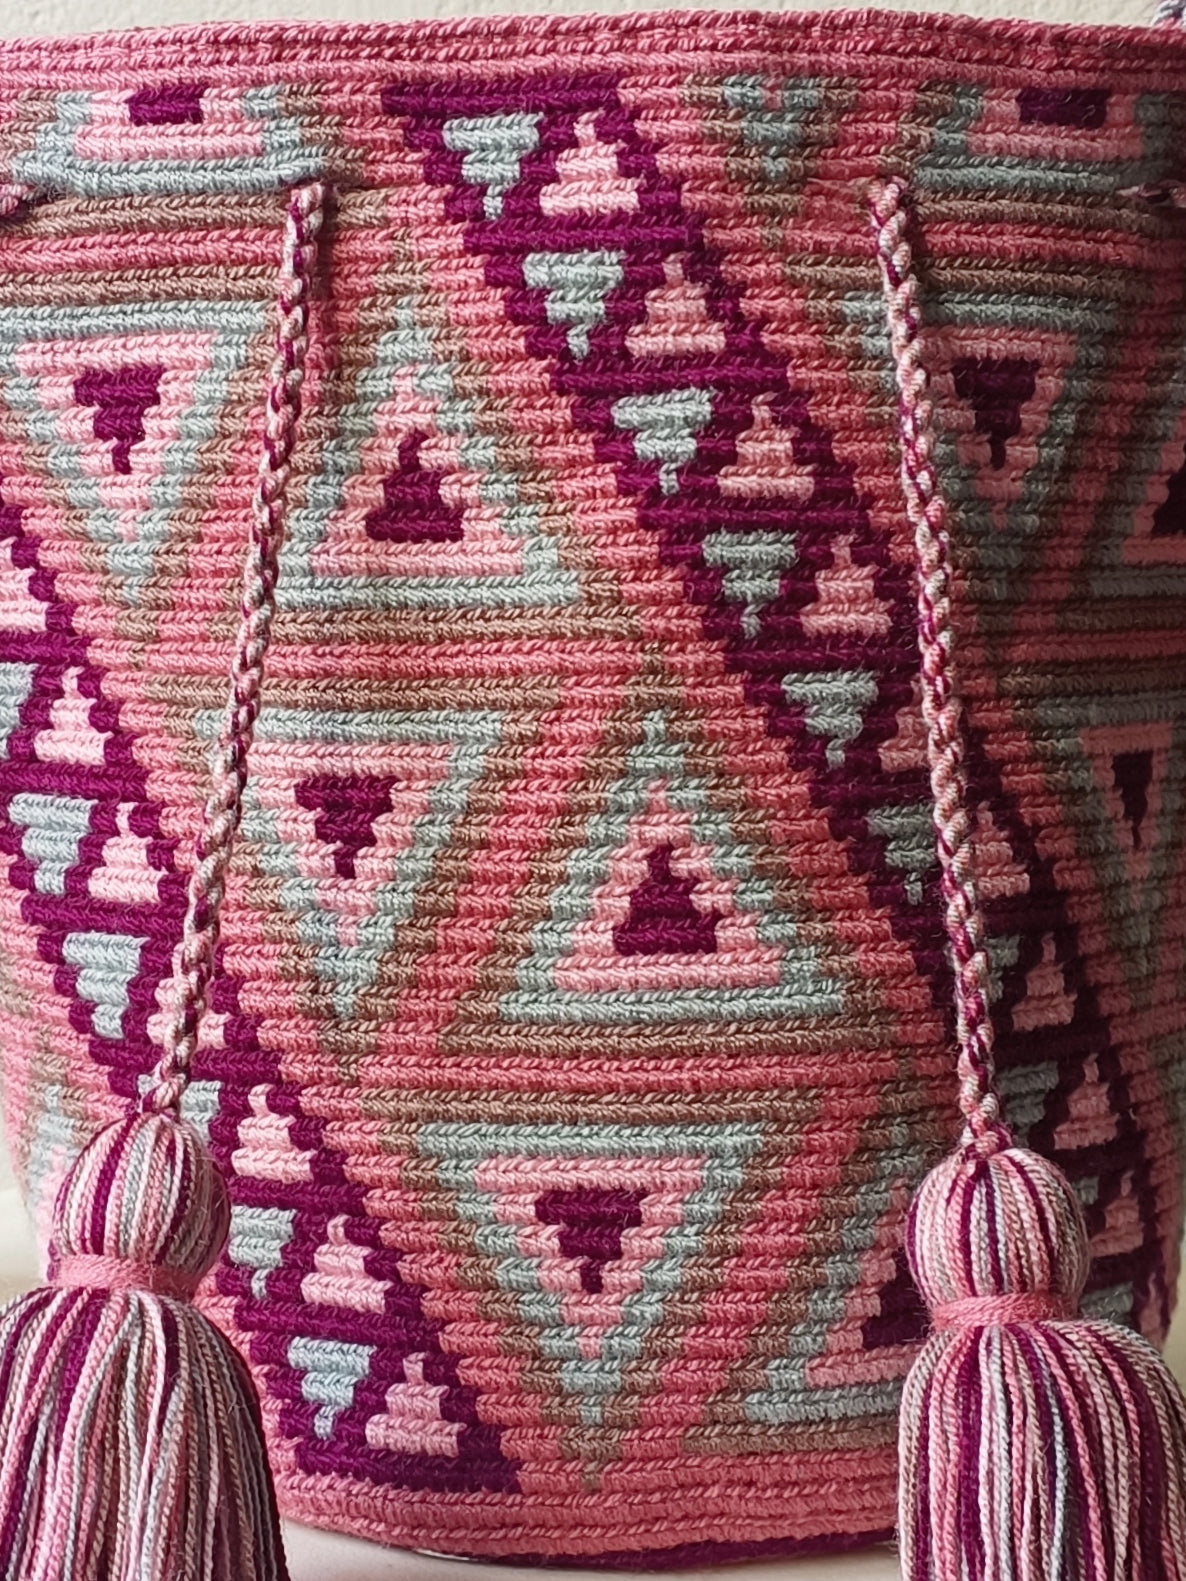 CLOSE OUT - Dark pink and gray M mochila shoulder bag